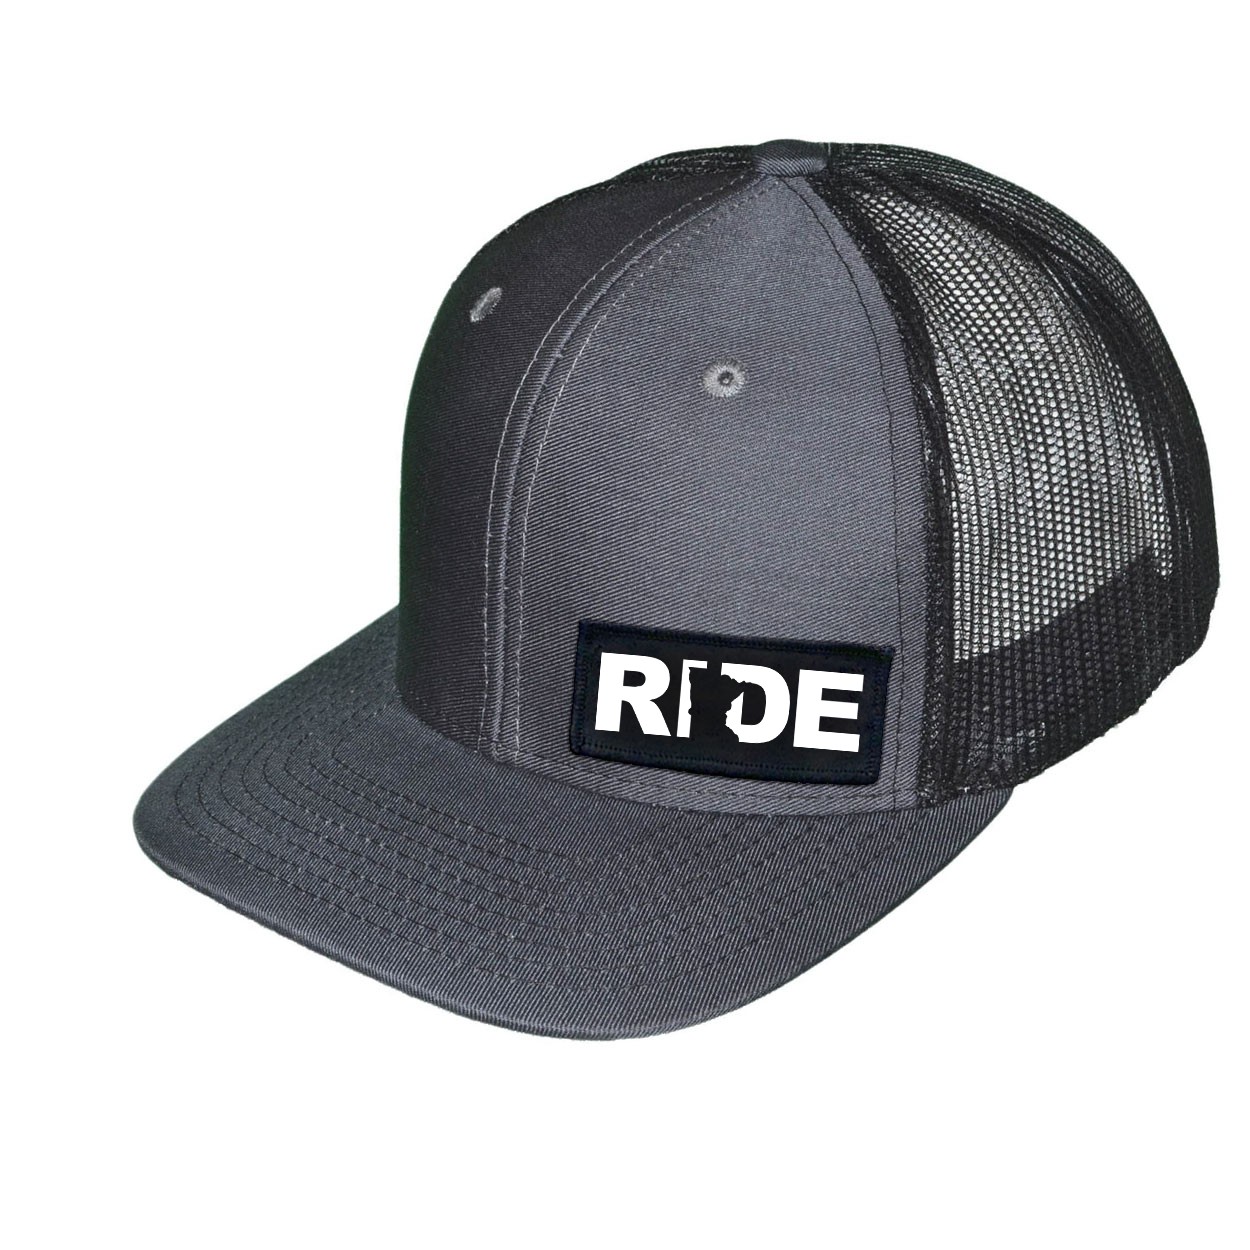 Ride Minnesota Night Out Woven Patch Snapback Trucker Hat Dark Gray/Black (White Logo)